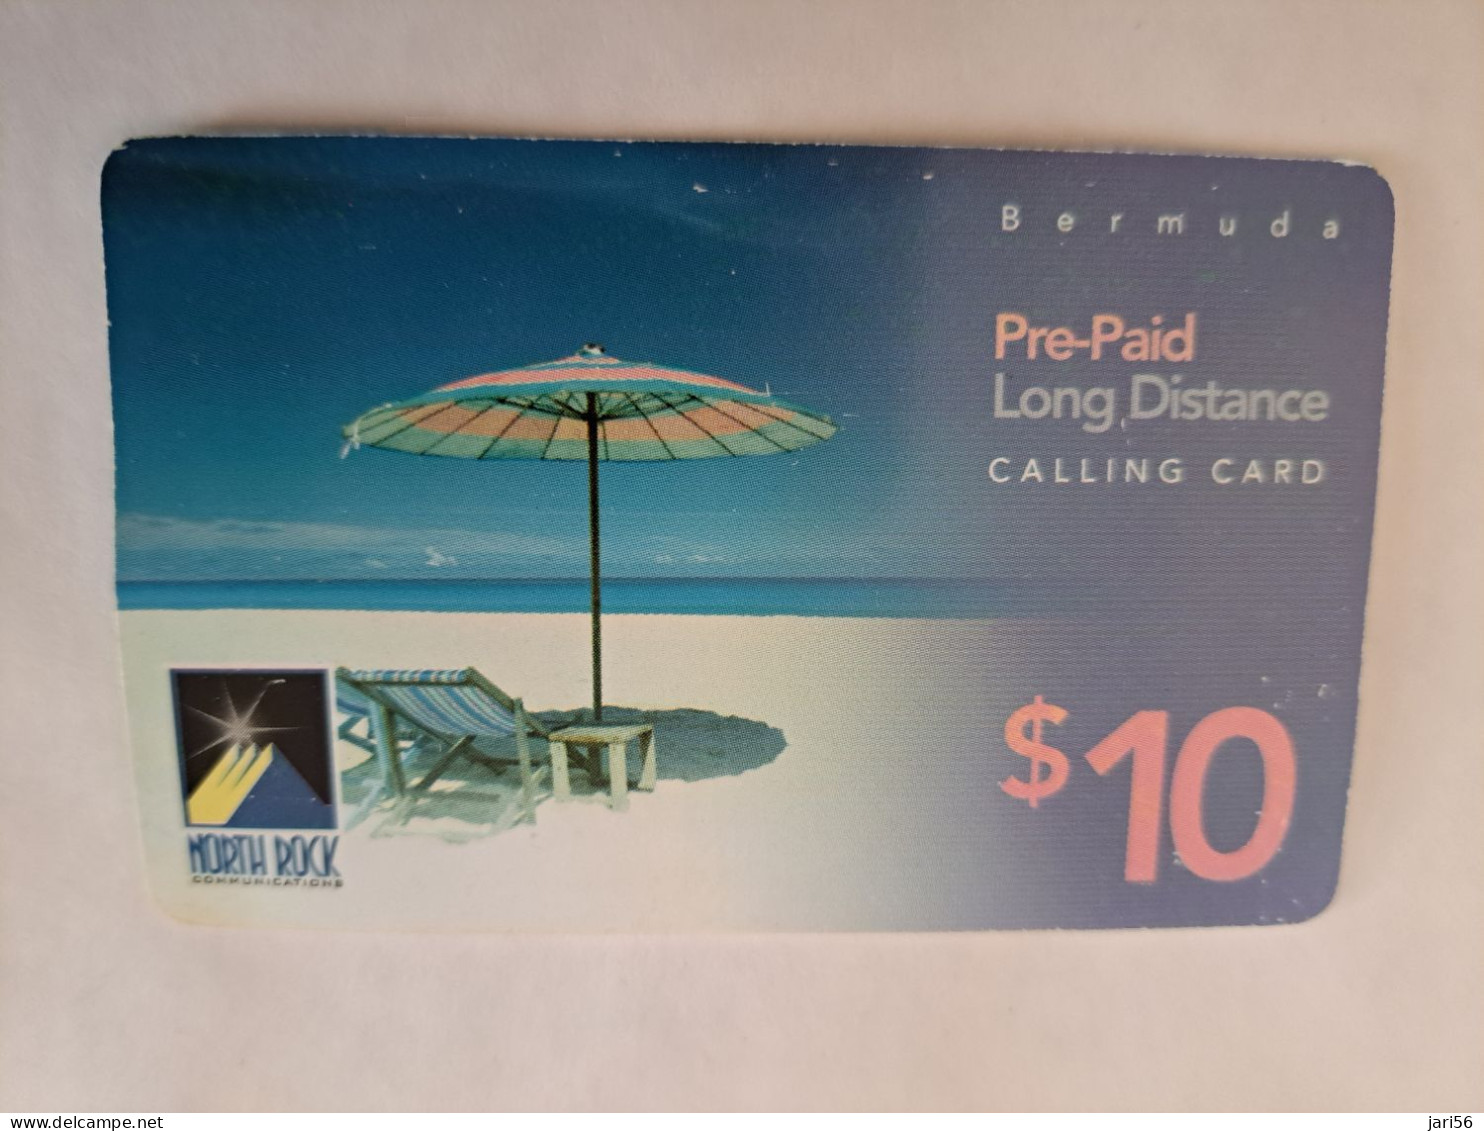 BERMUDA  $10,-,-NORTH ROCK   BERMUDA / PARASOL ON BEACH /  3/2005/   PREPAID CARD  Fine USED  **14794** - Bermudas